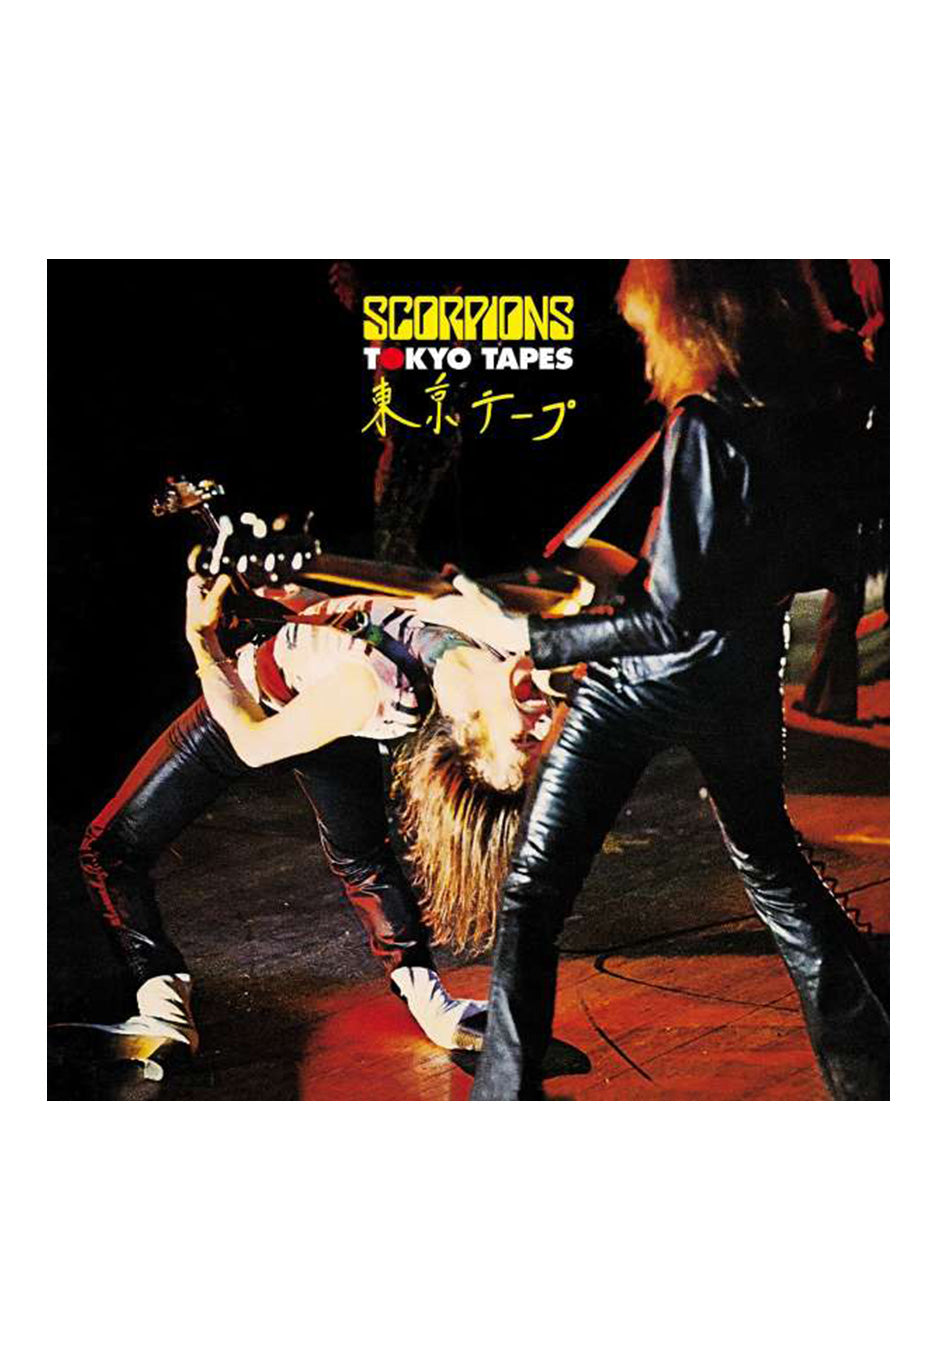 Scorpions - Tokyo Tapes (Live) (50th Anniversary) (BMG 10th Anniversary)  - Digipak 3 CD